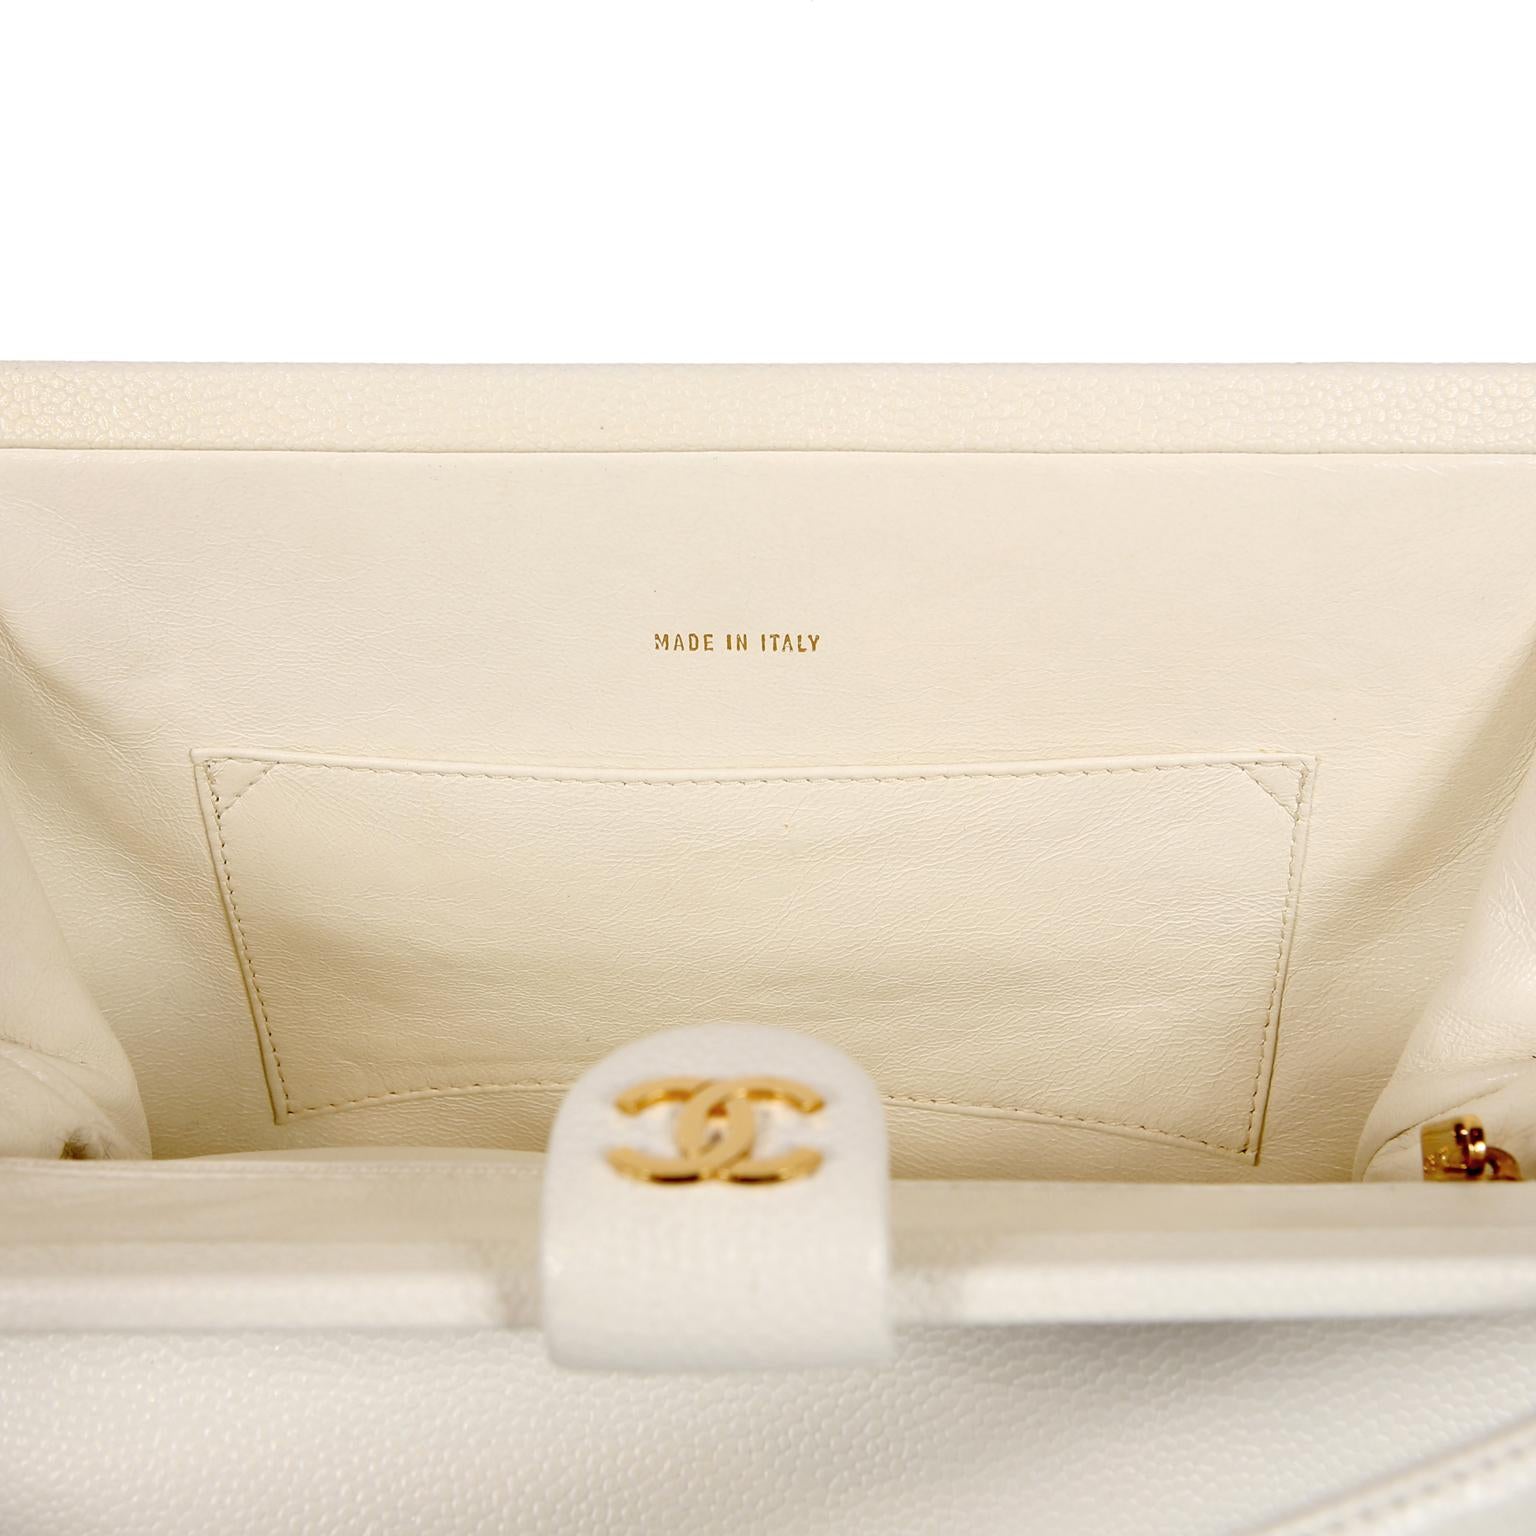 Chanel White Caviar Frame Top Bag 2